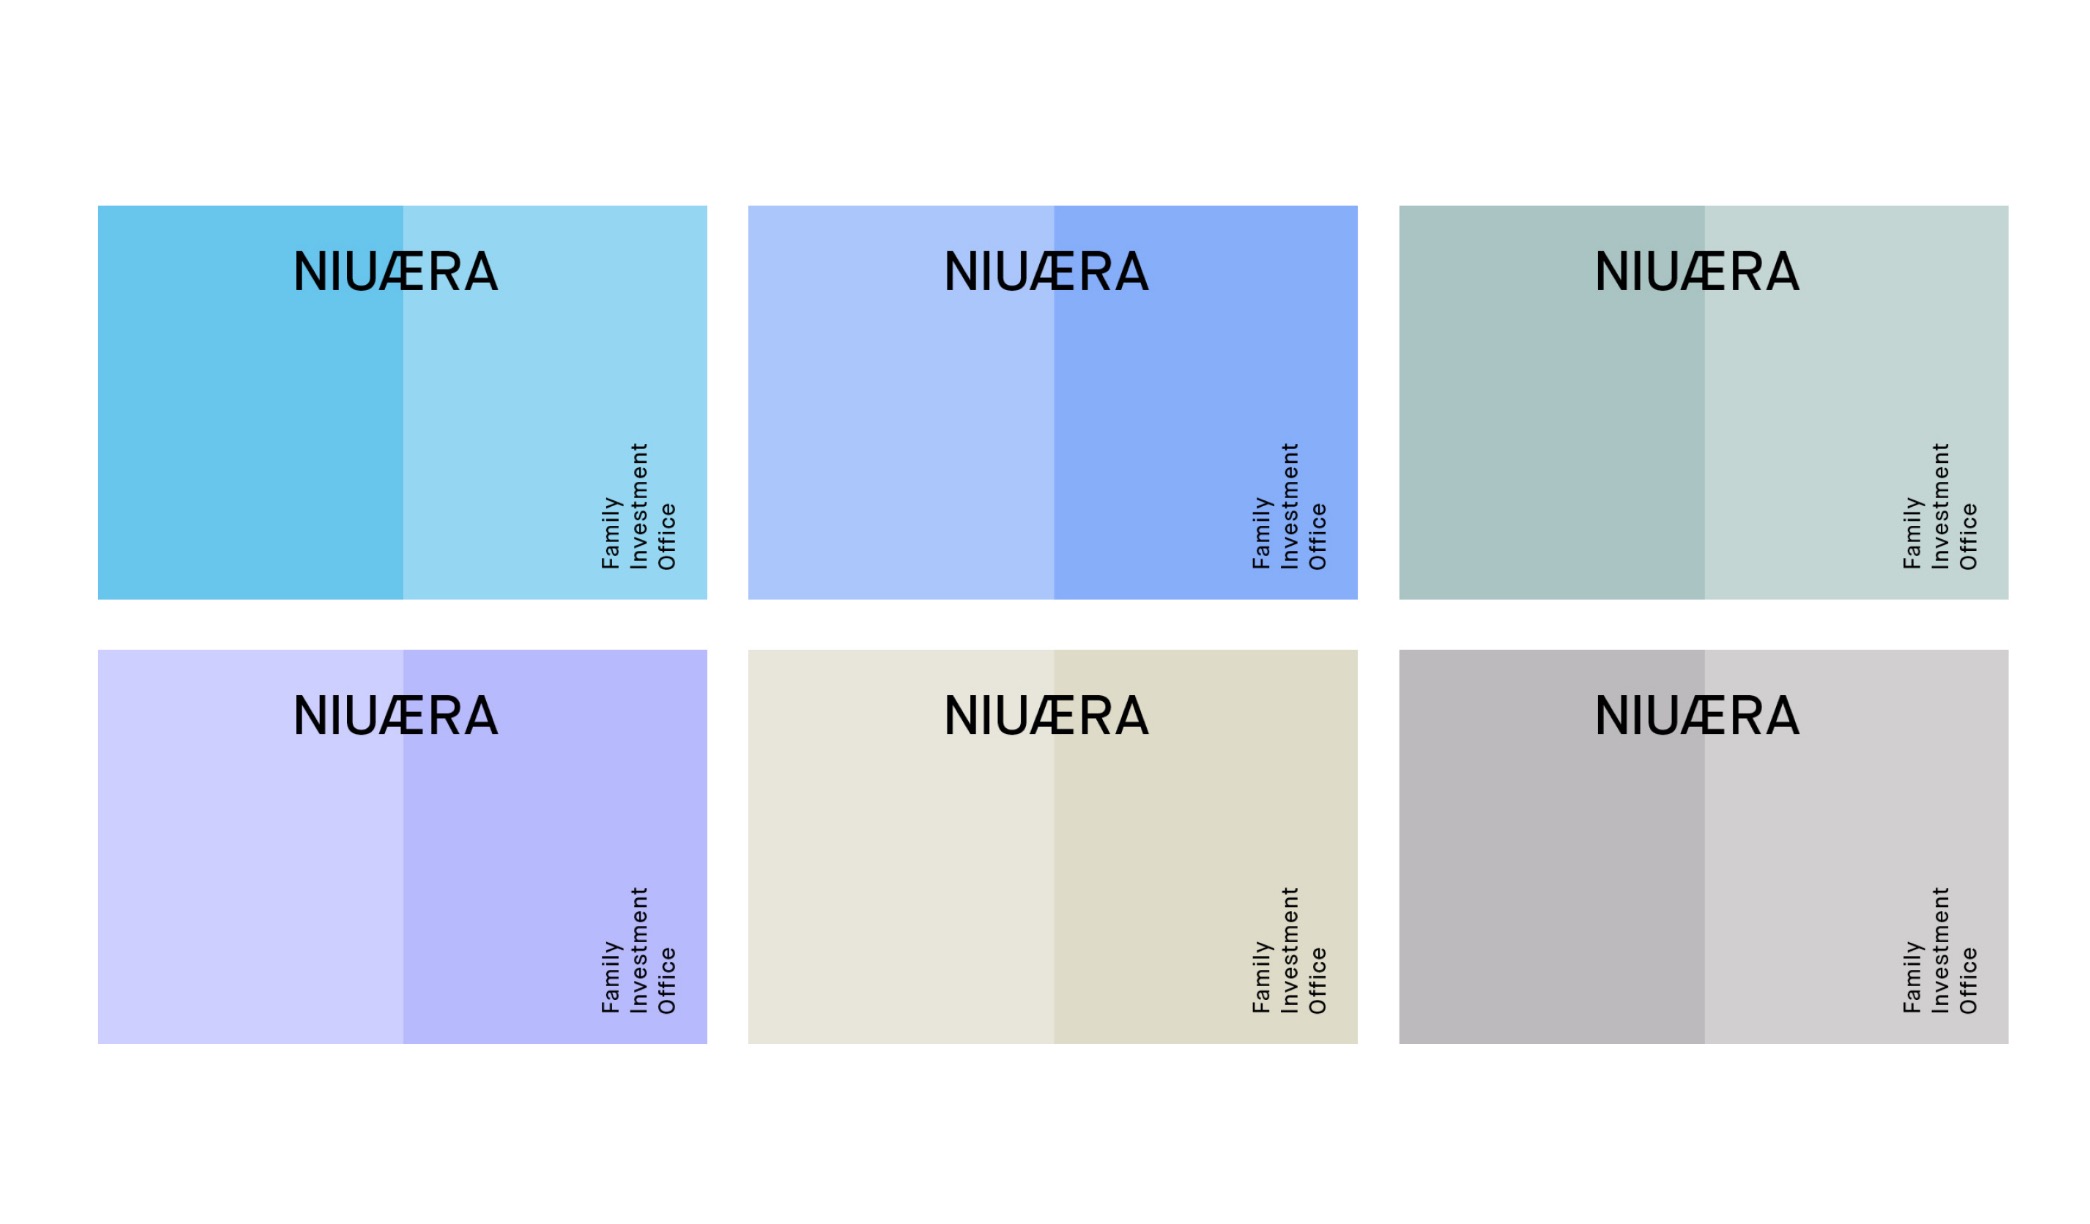 Niuaera Investments